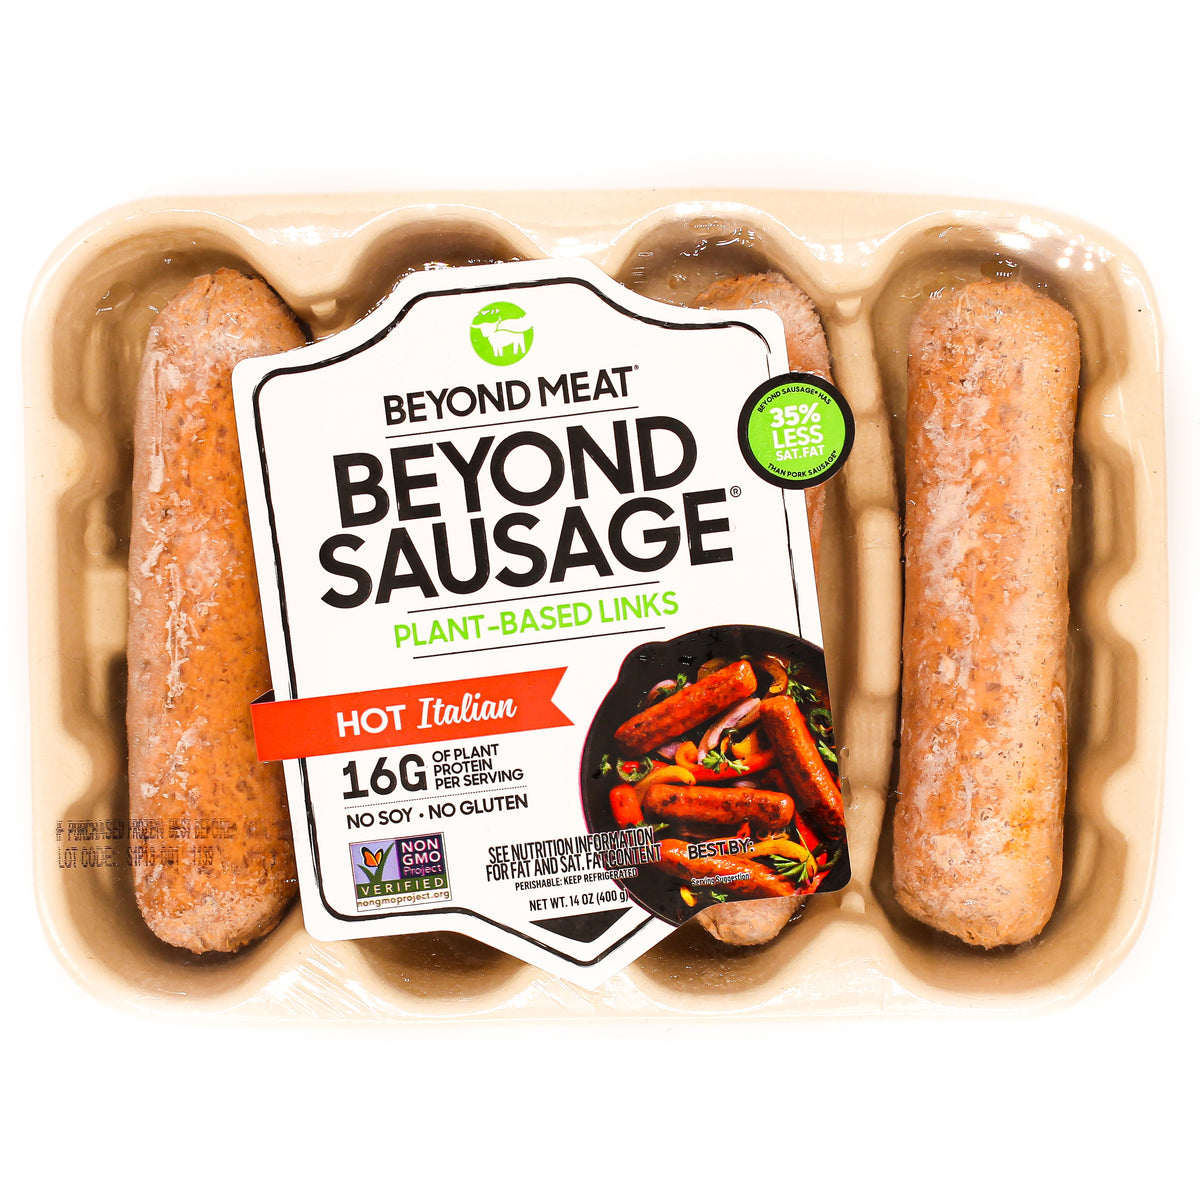 Beyond Meat Beyond Sausage Hot Italian